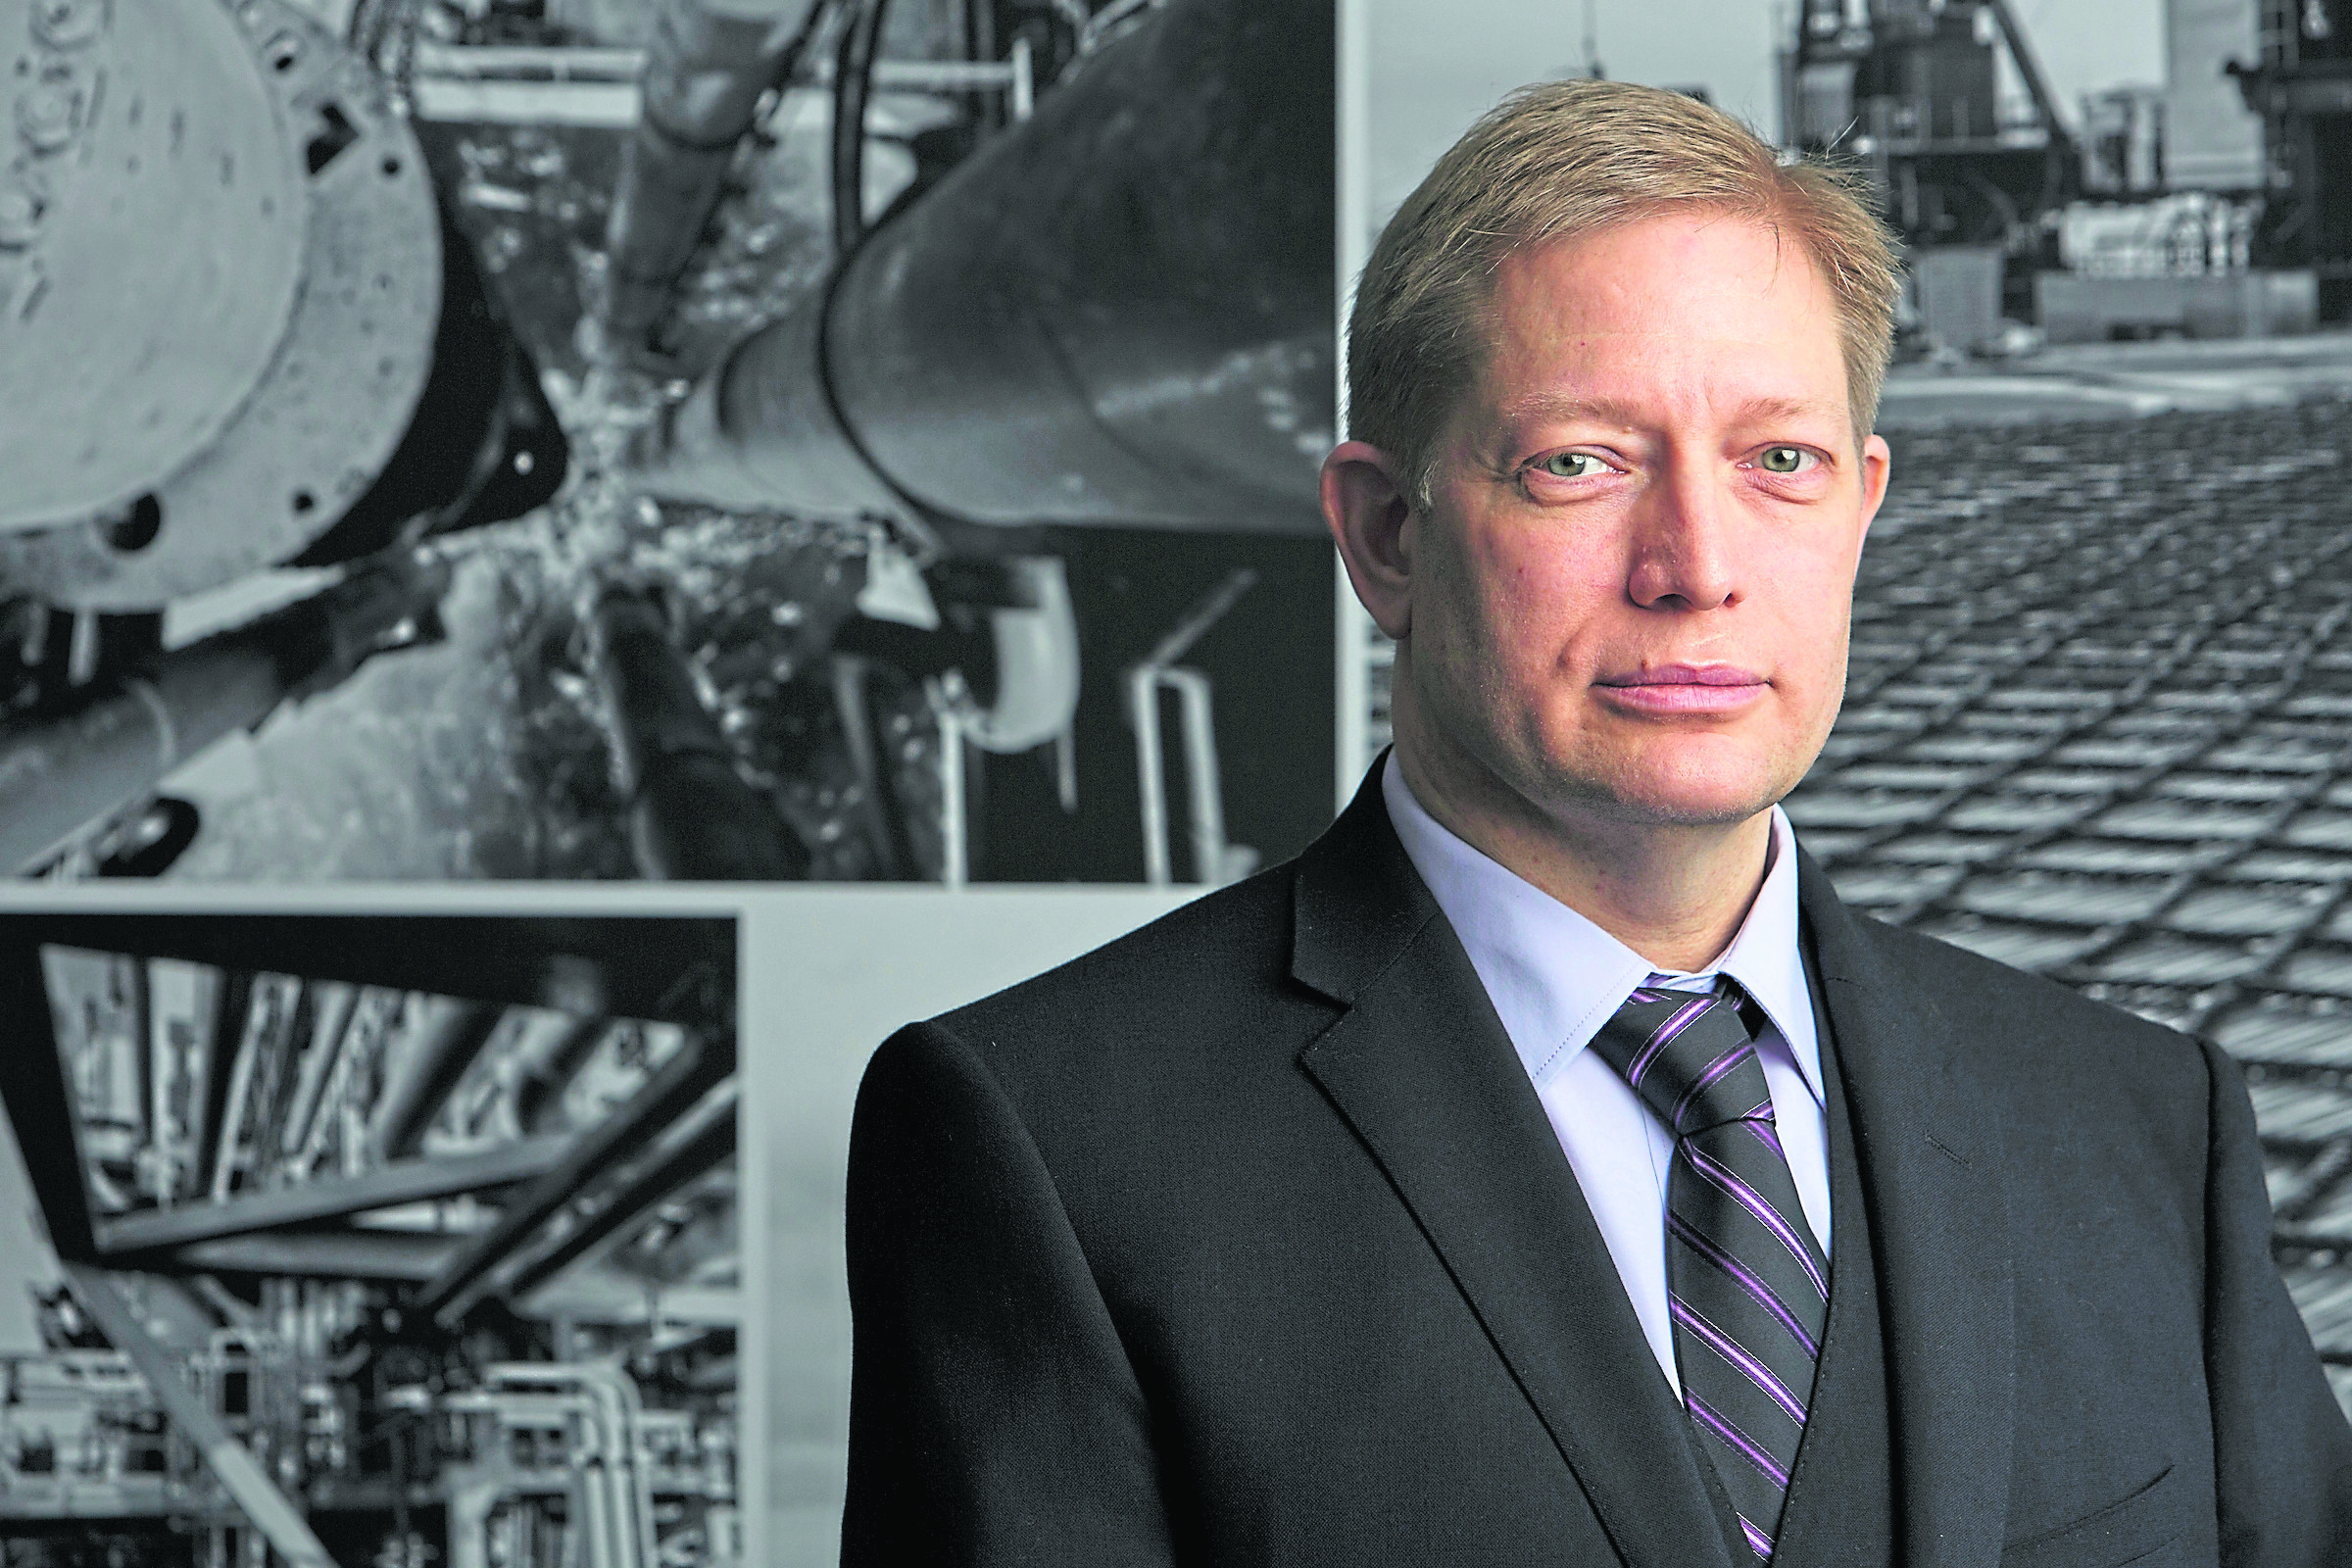 Matt Abraham, Oil & Gas UK's supply chain director